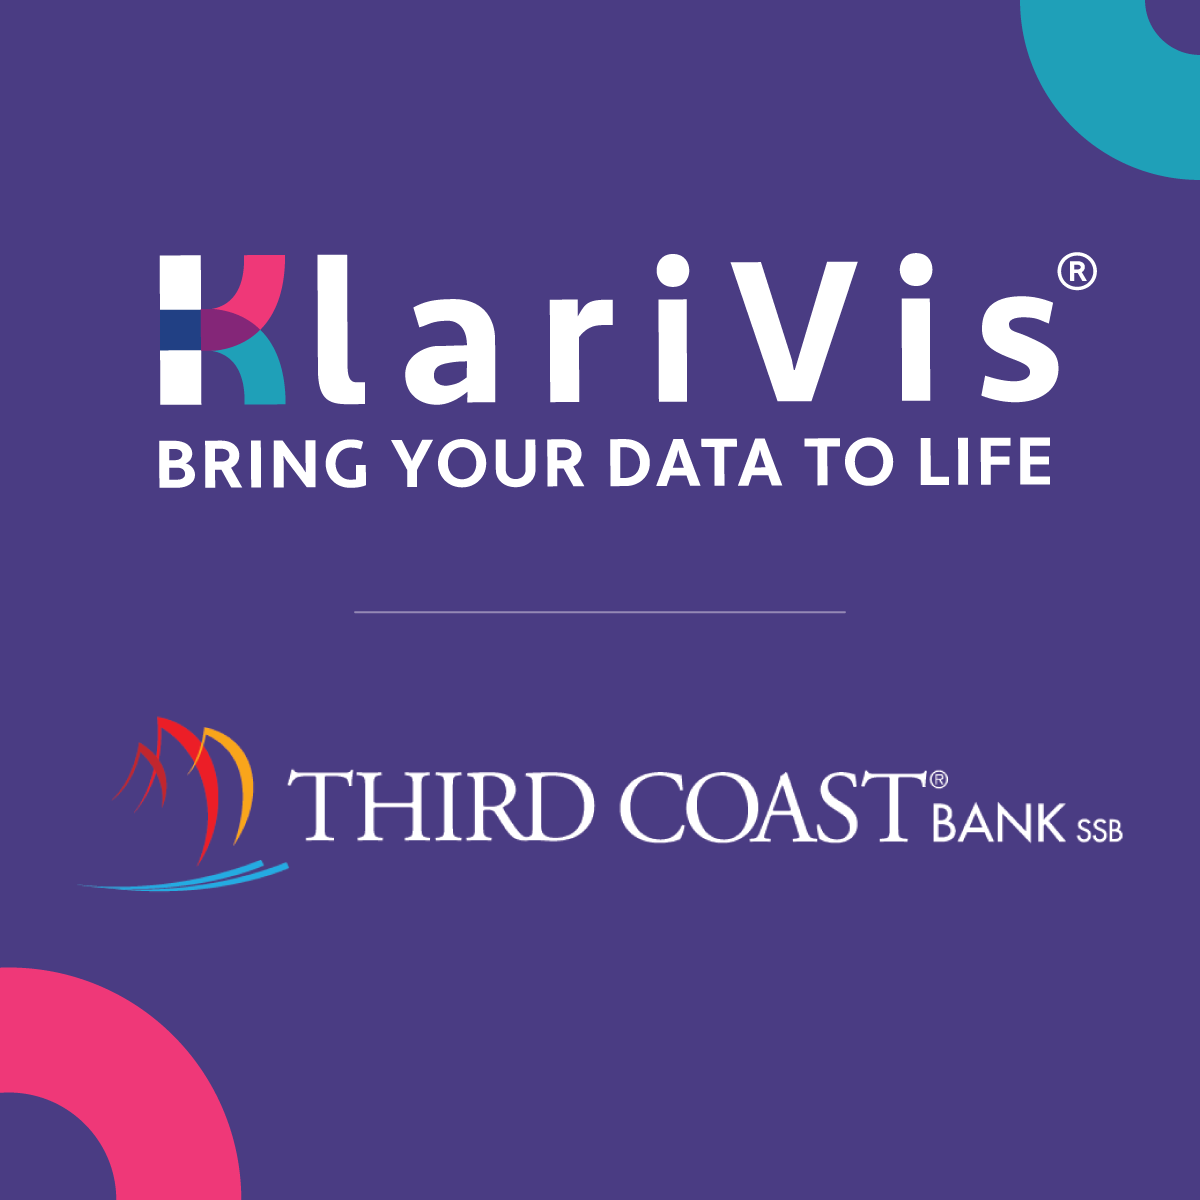 klarivis bring your data to life - third coast bank